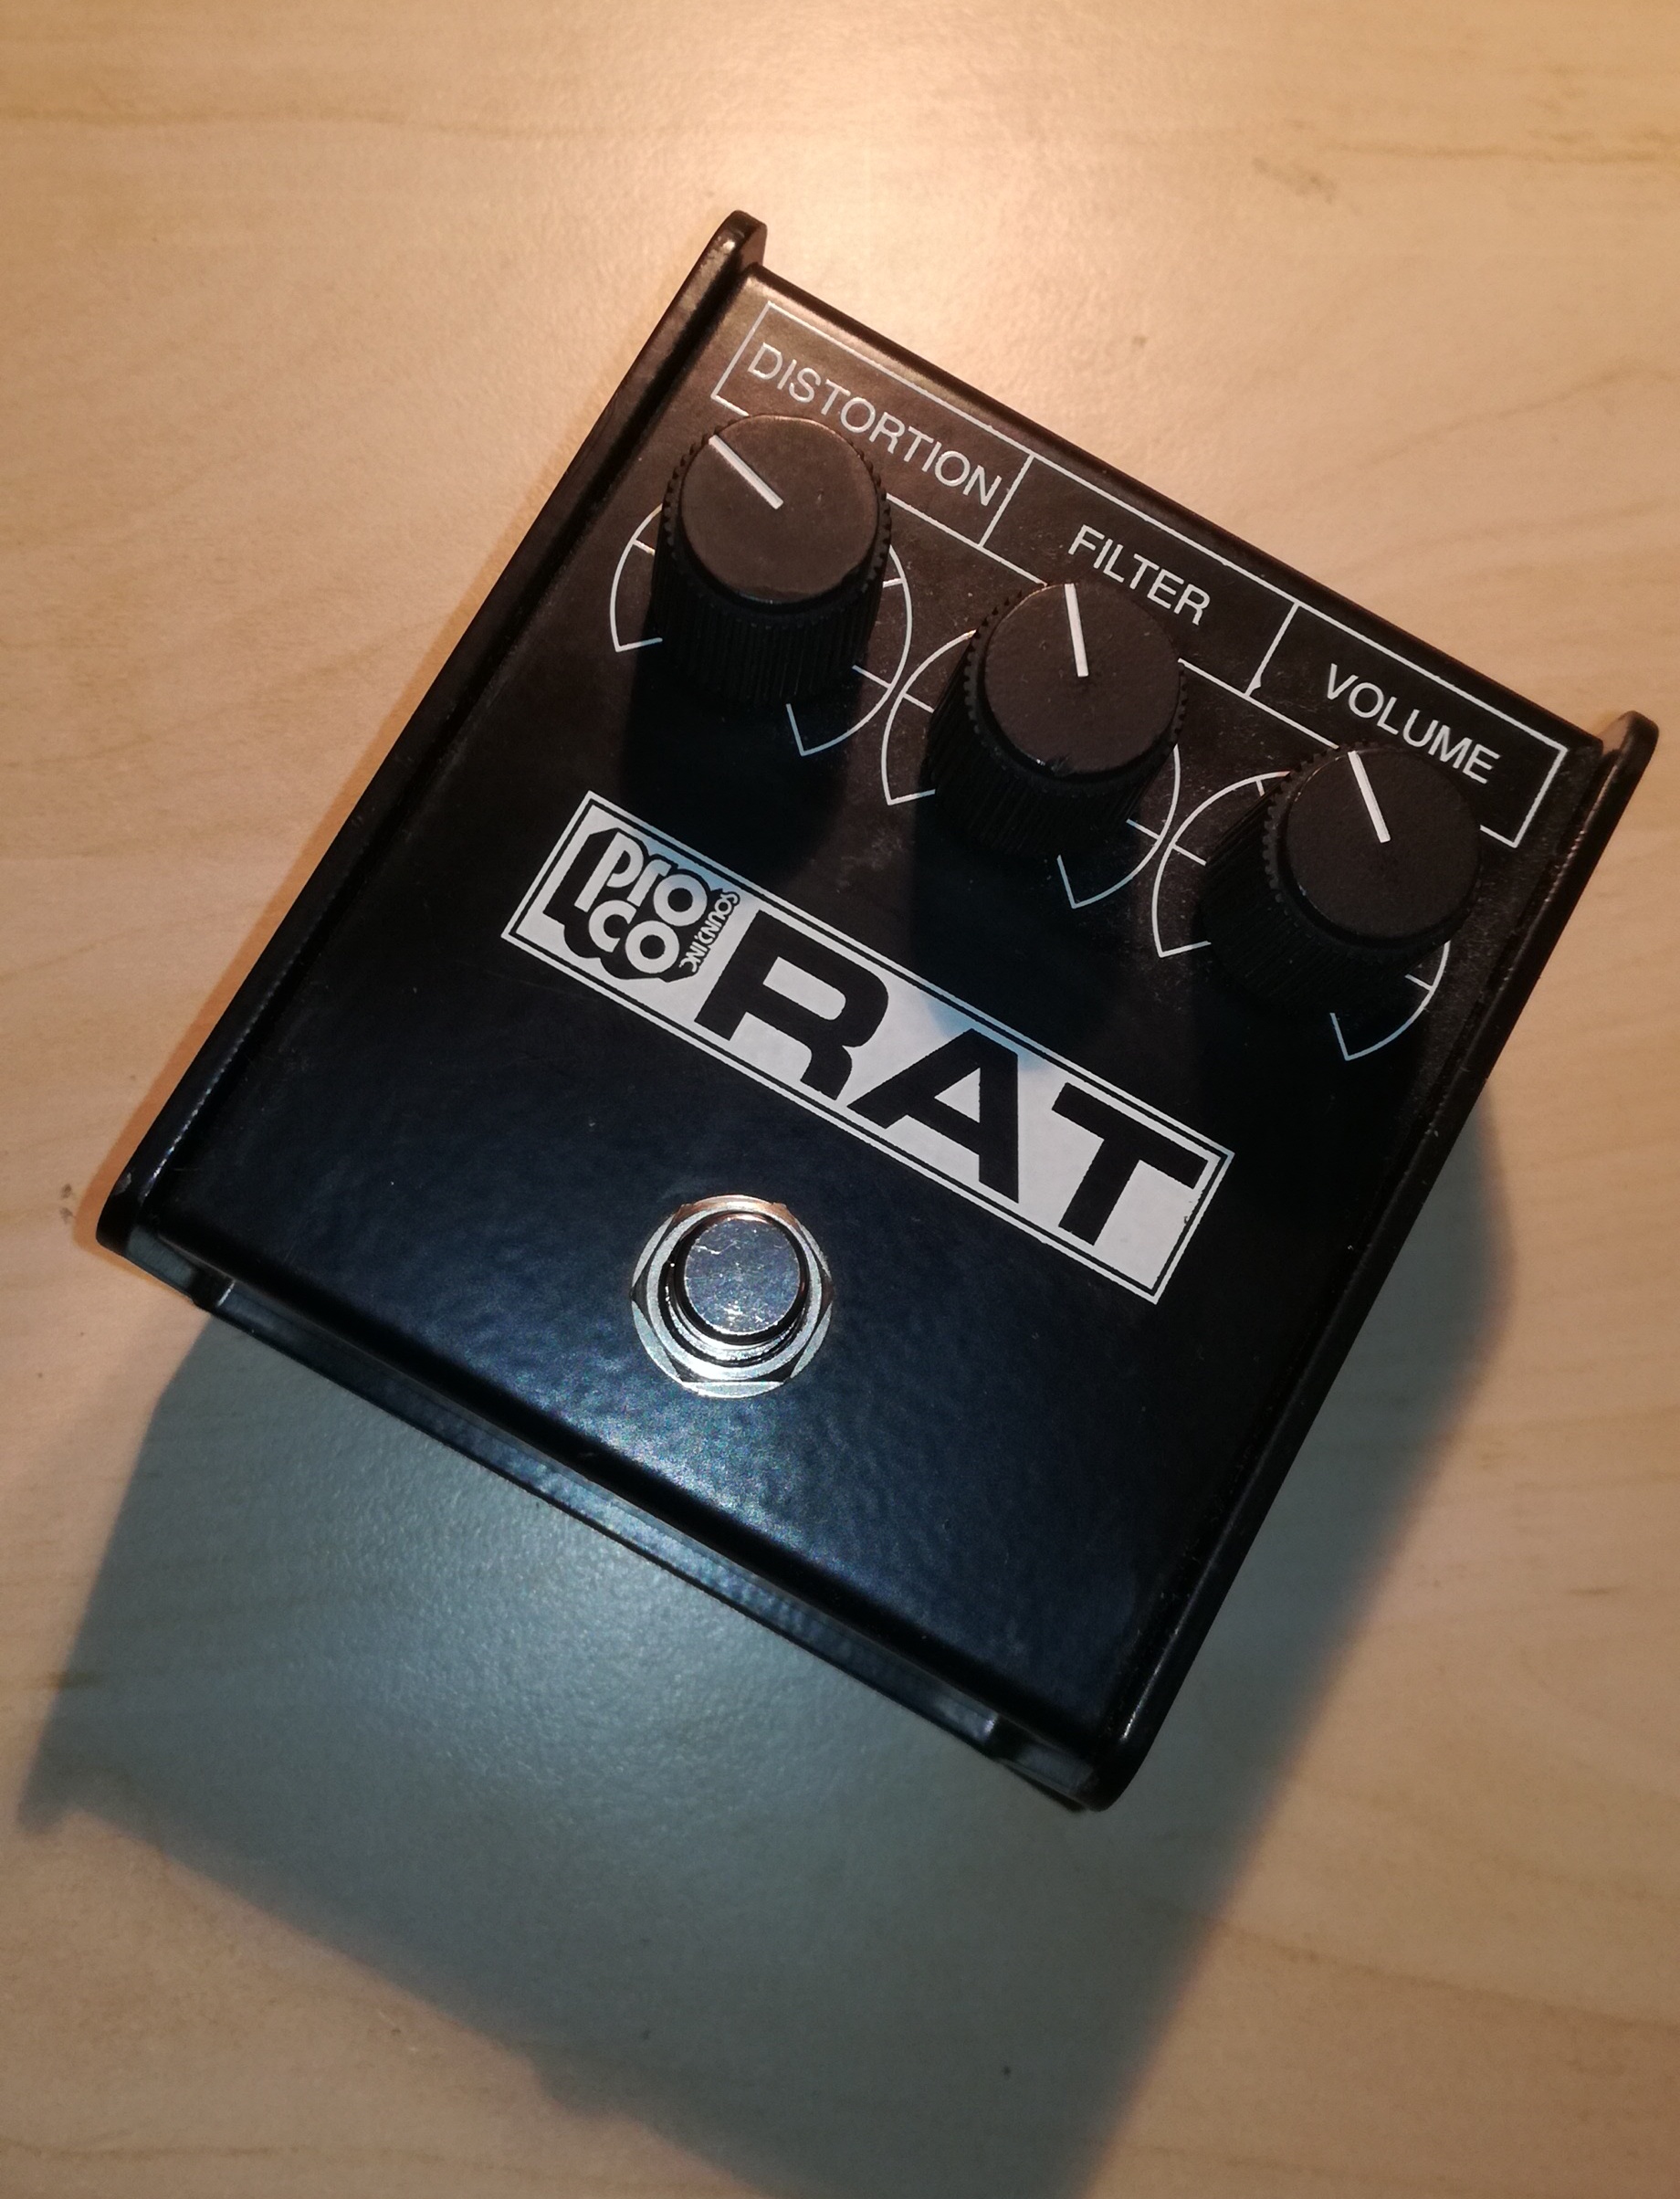 Limited Edition '85 Whiteface RAT ProCo Sound - Audiofanzine